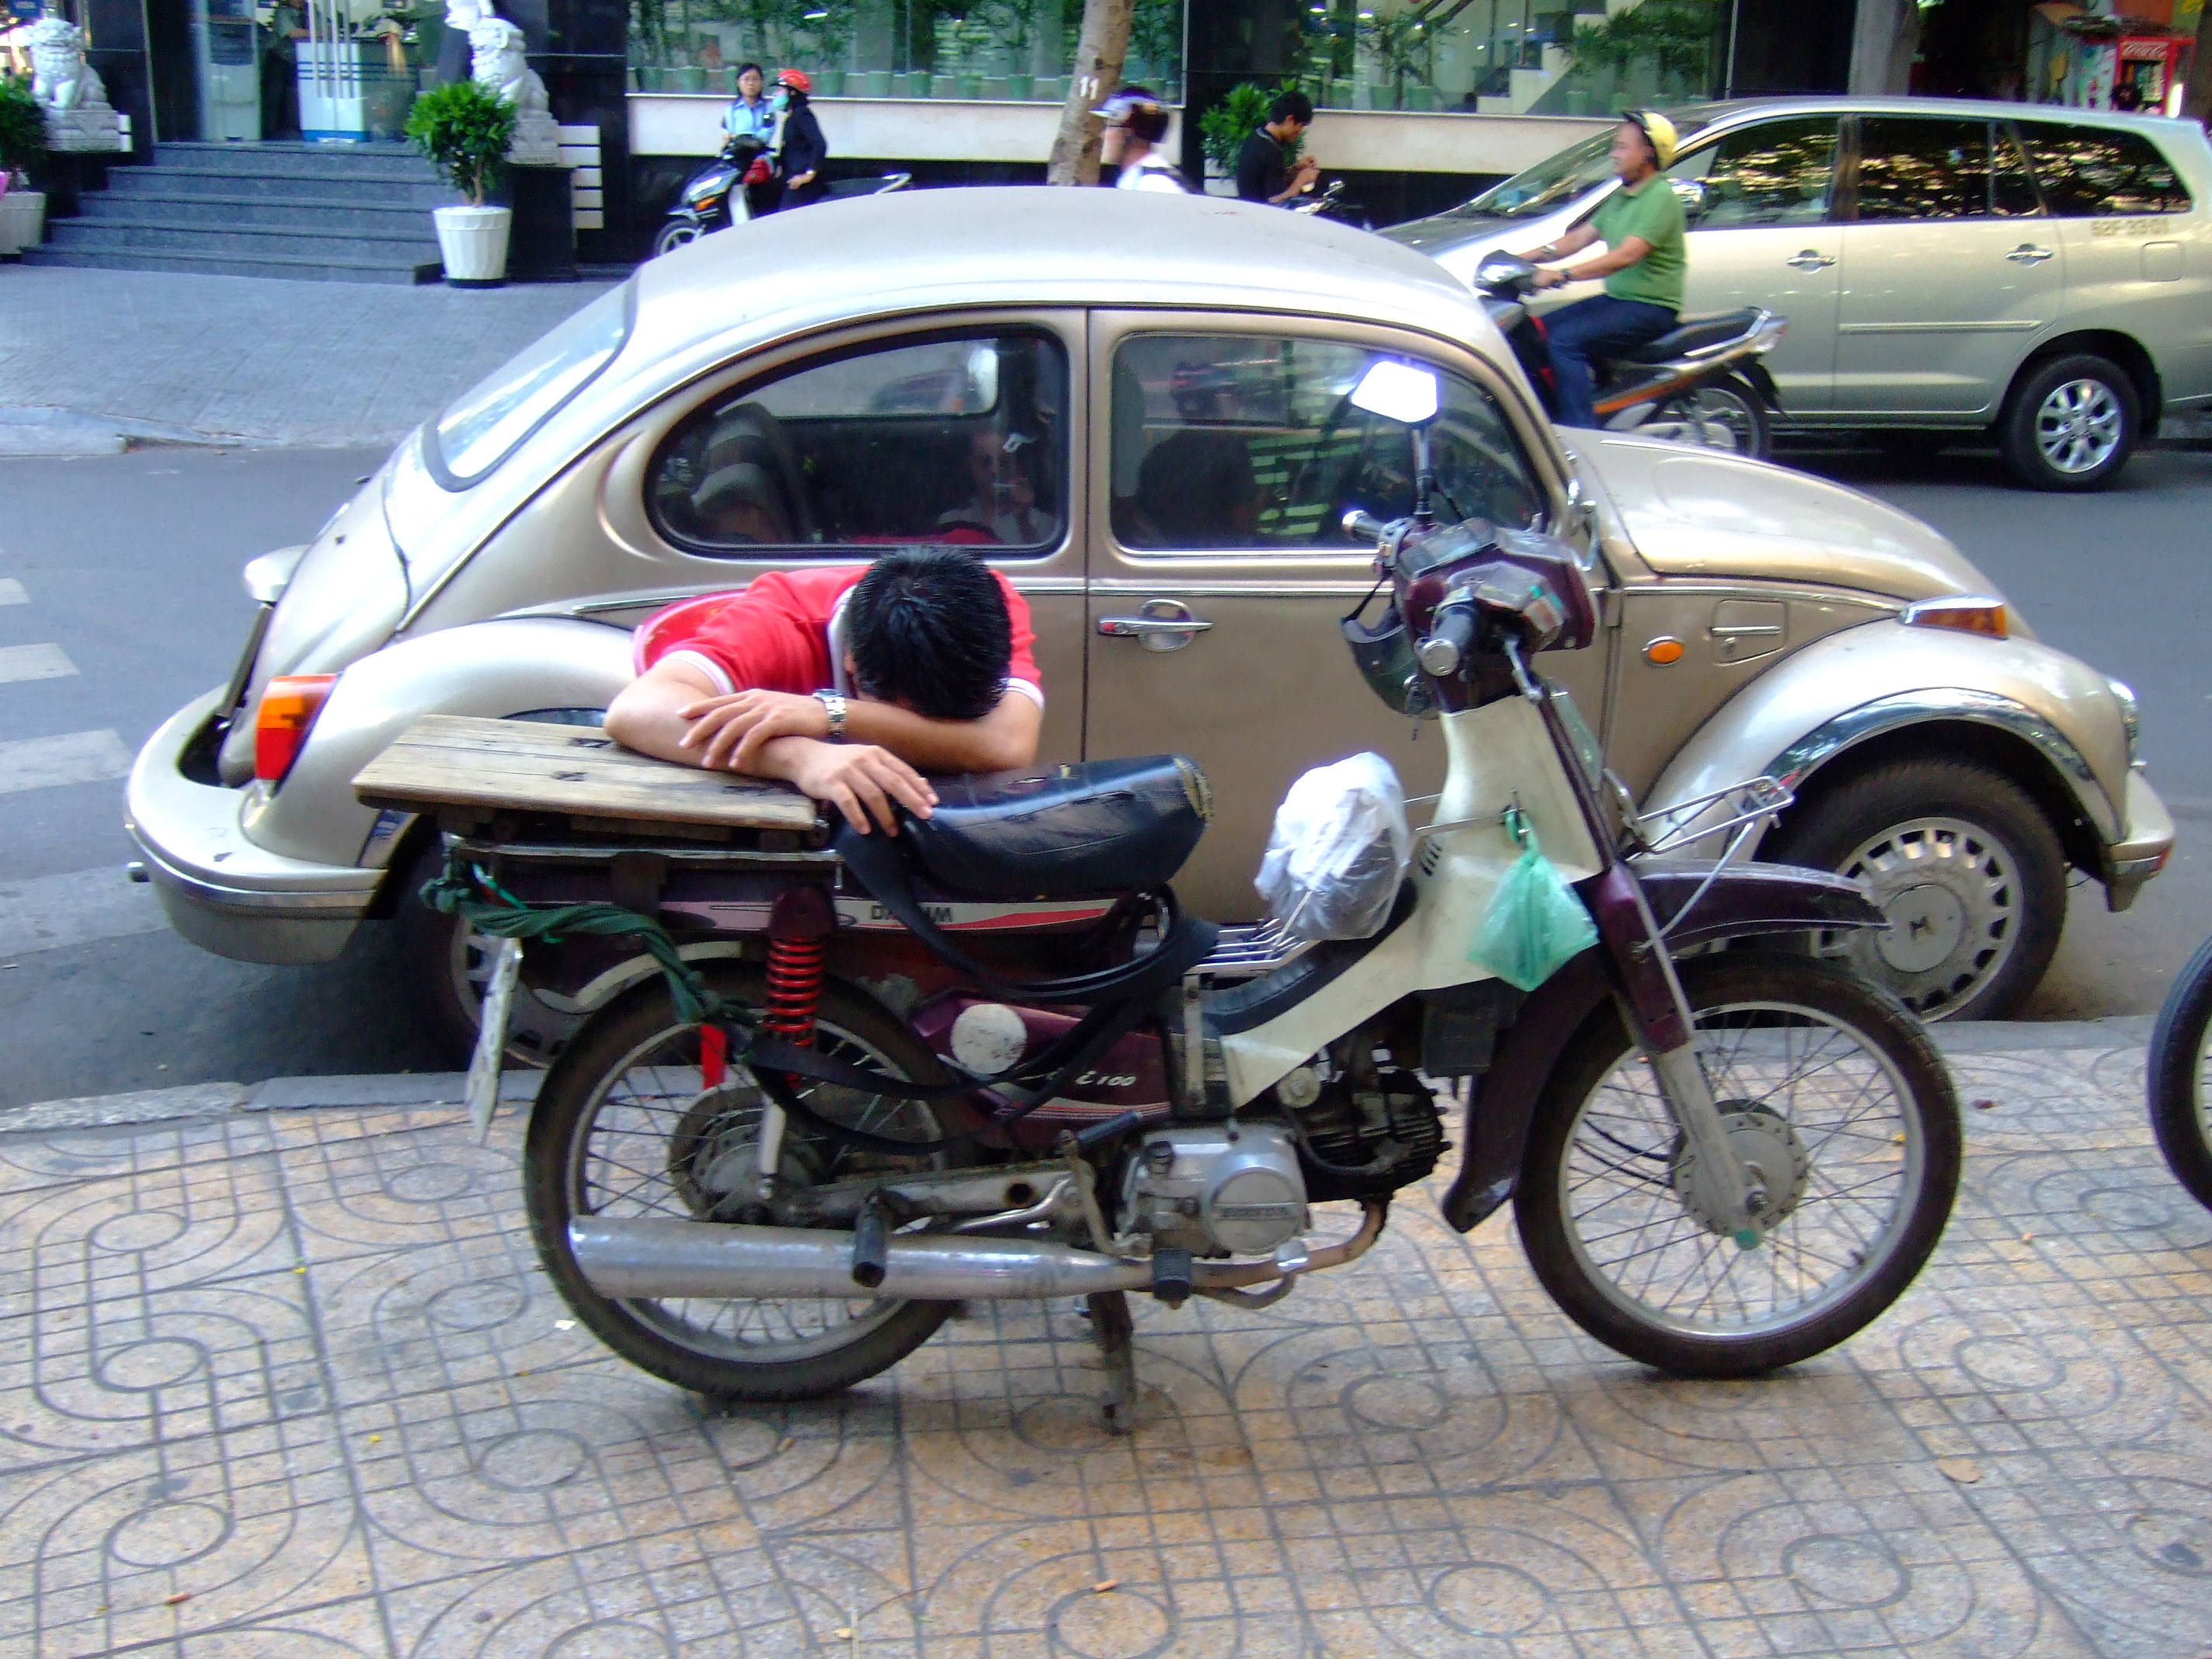 Vietnam Ho Chi Minh City motorbike street scenes Feb 2009 030